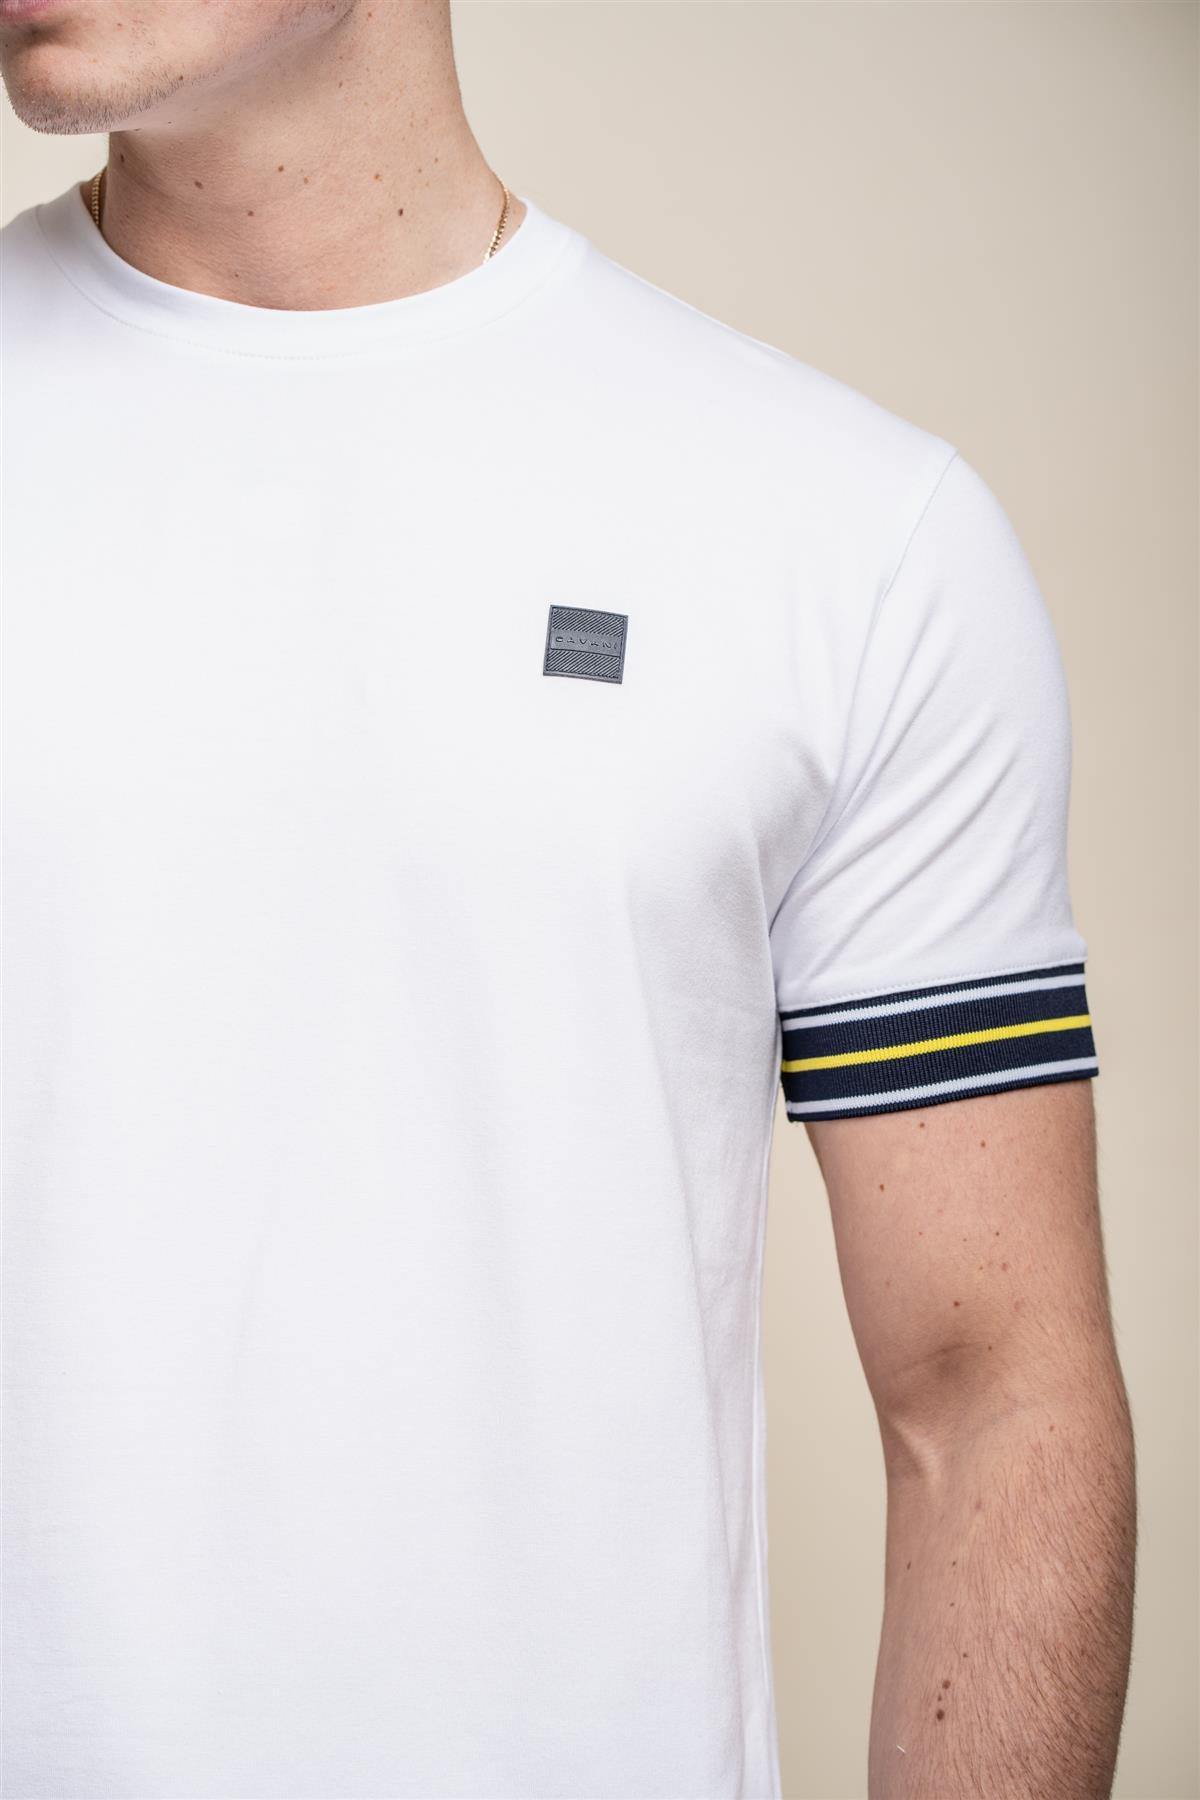 Malaga white T-shirt front detail